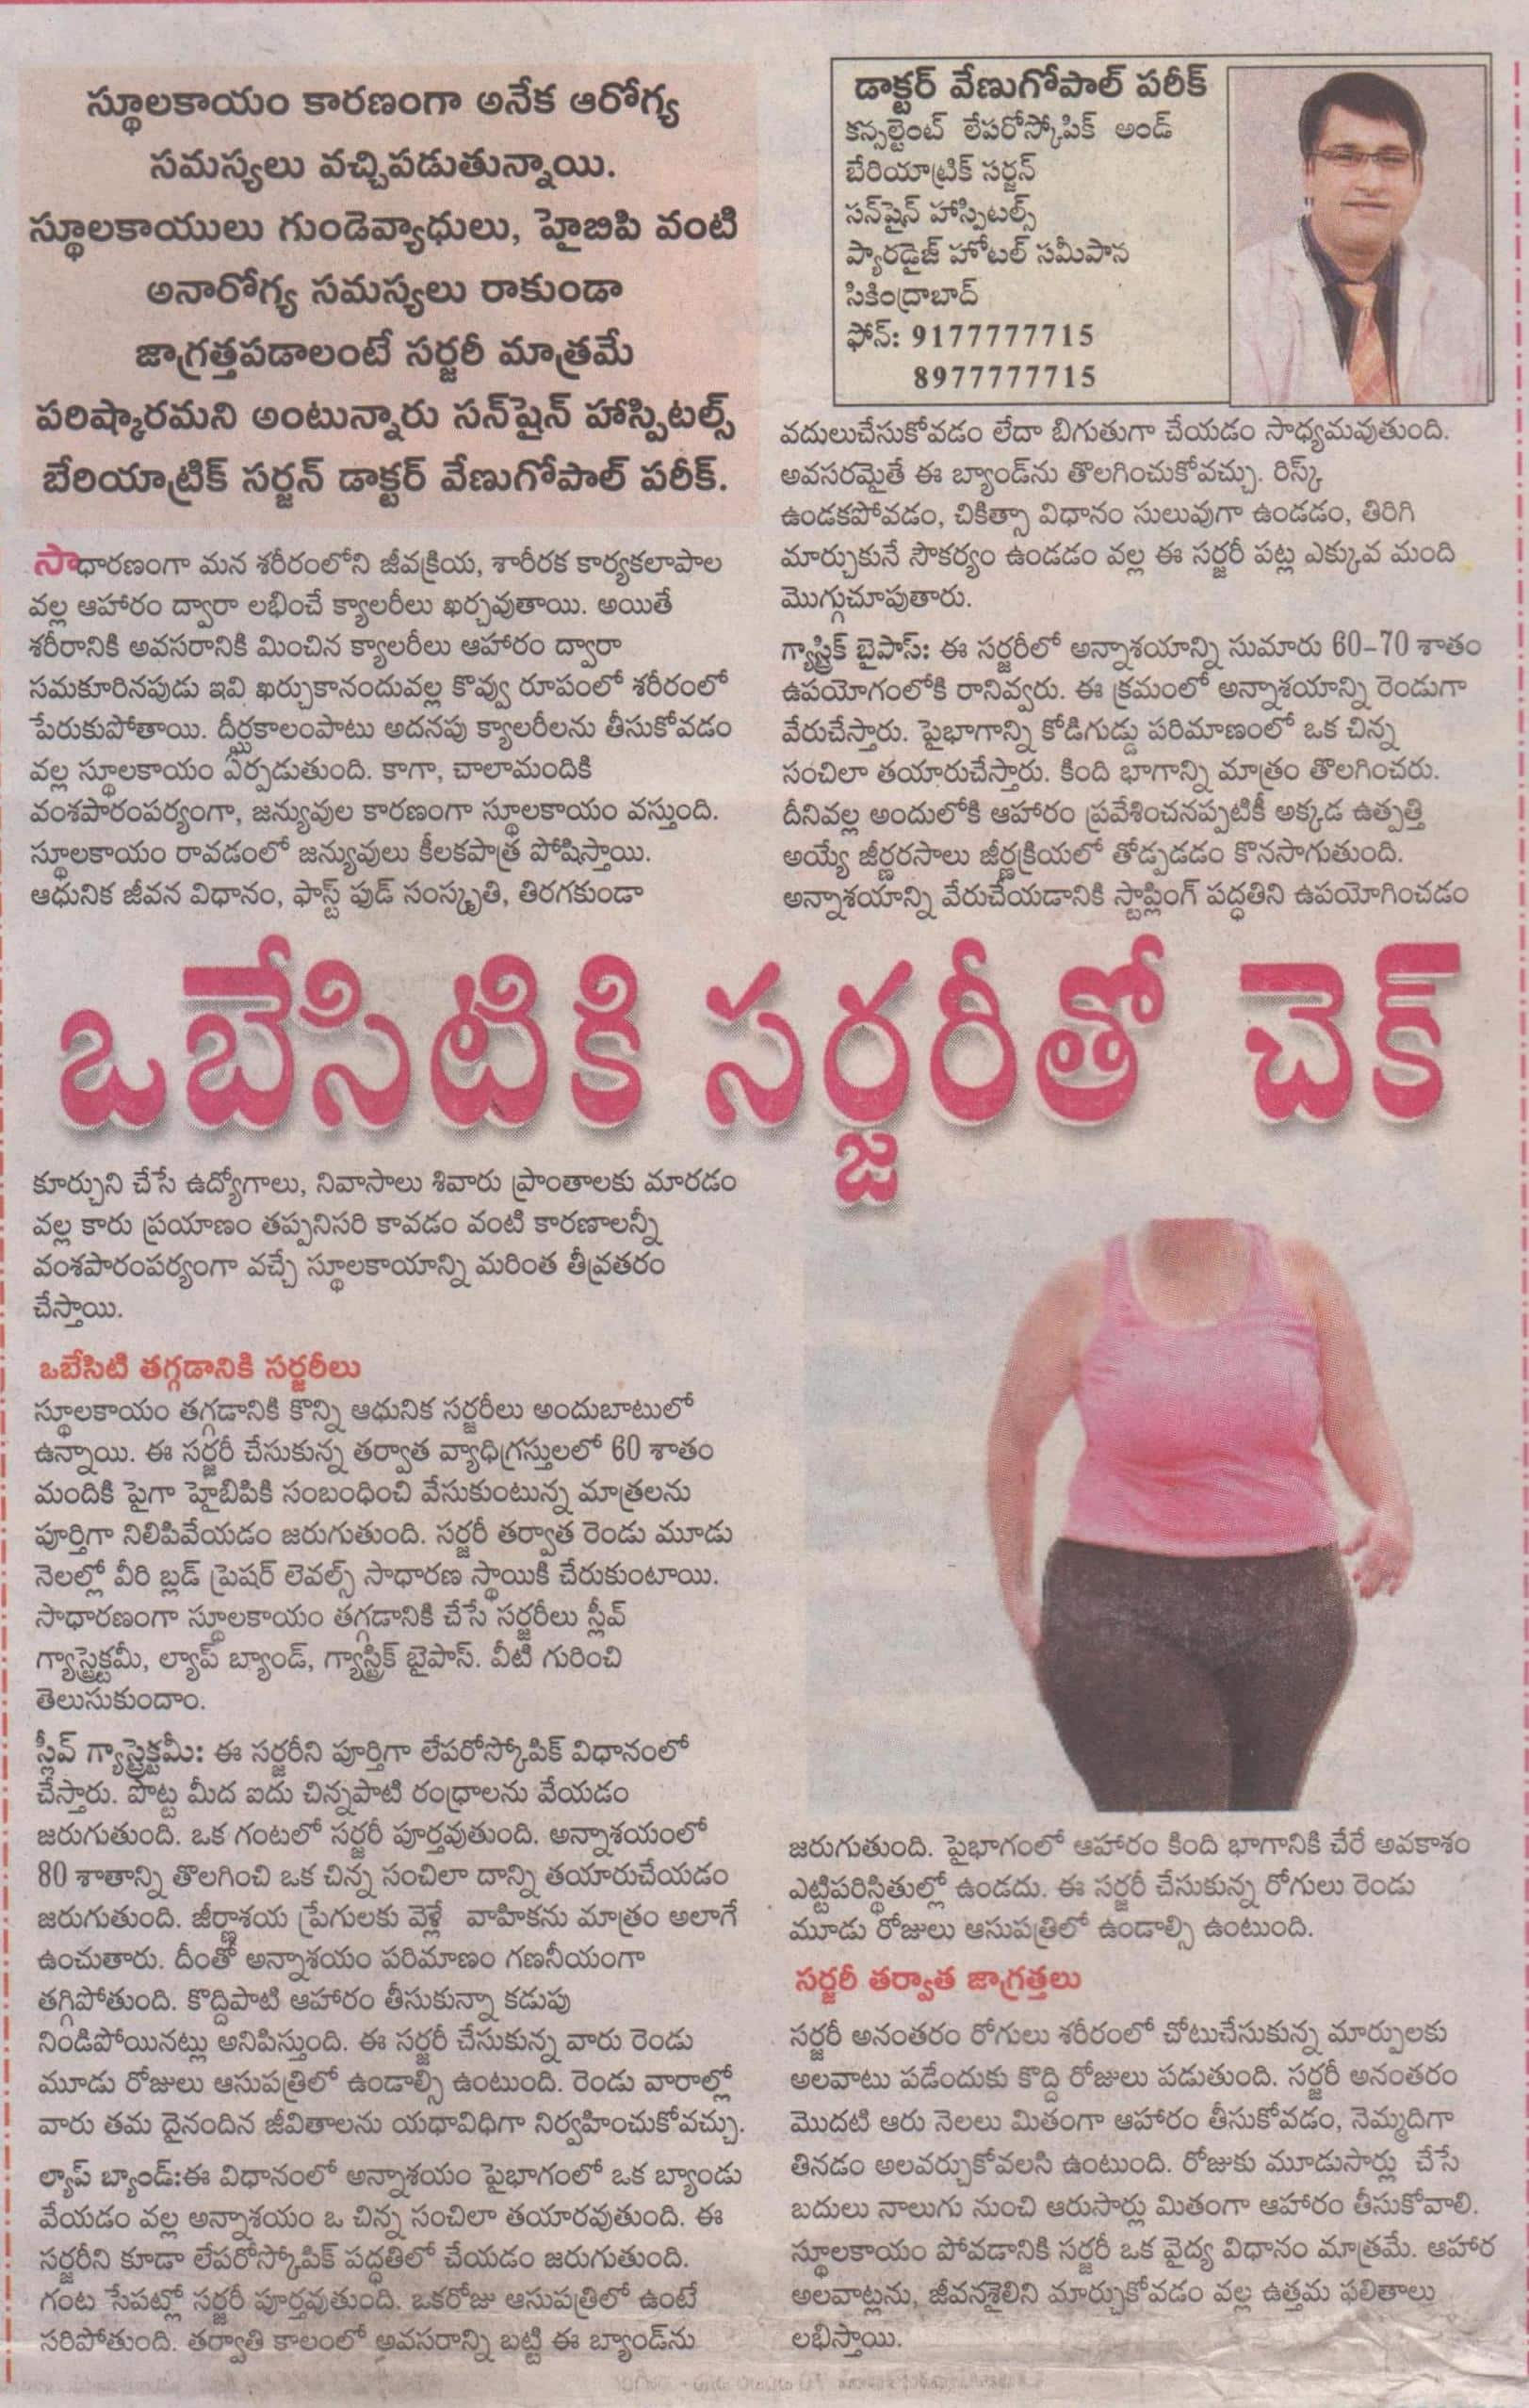 Best surgery option for obesity explained in Telugu news media